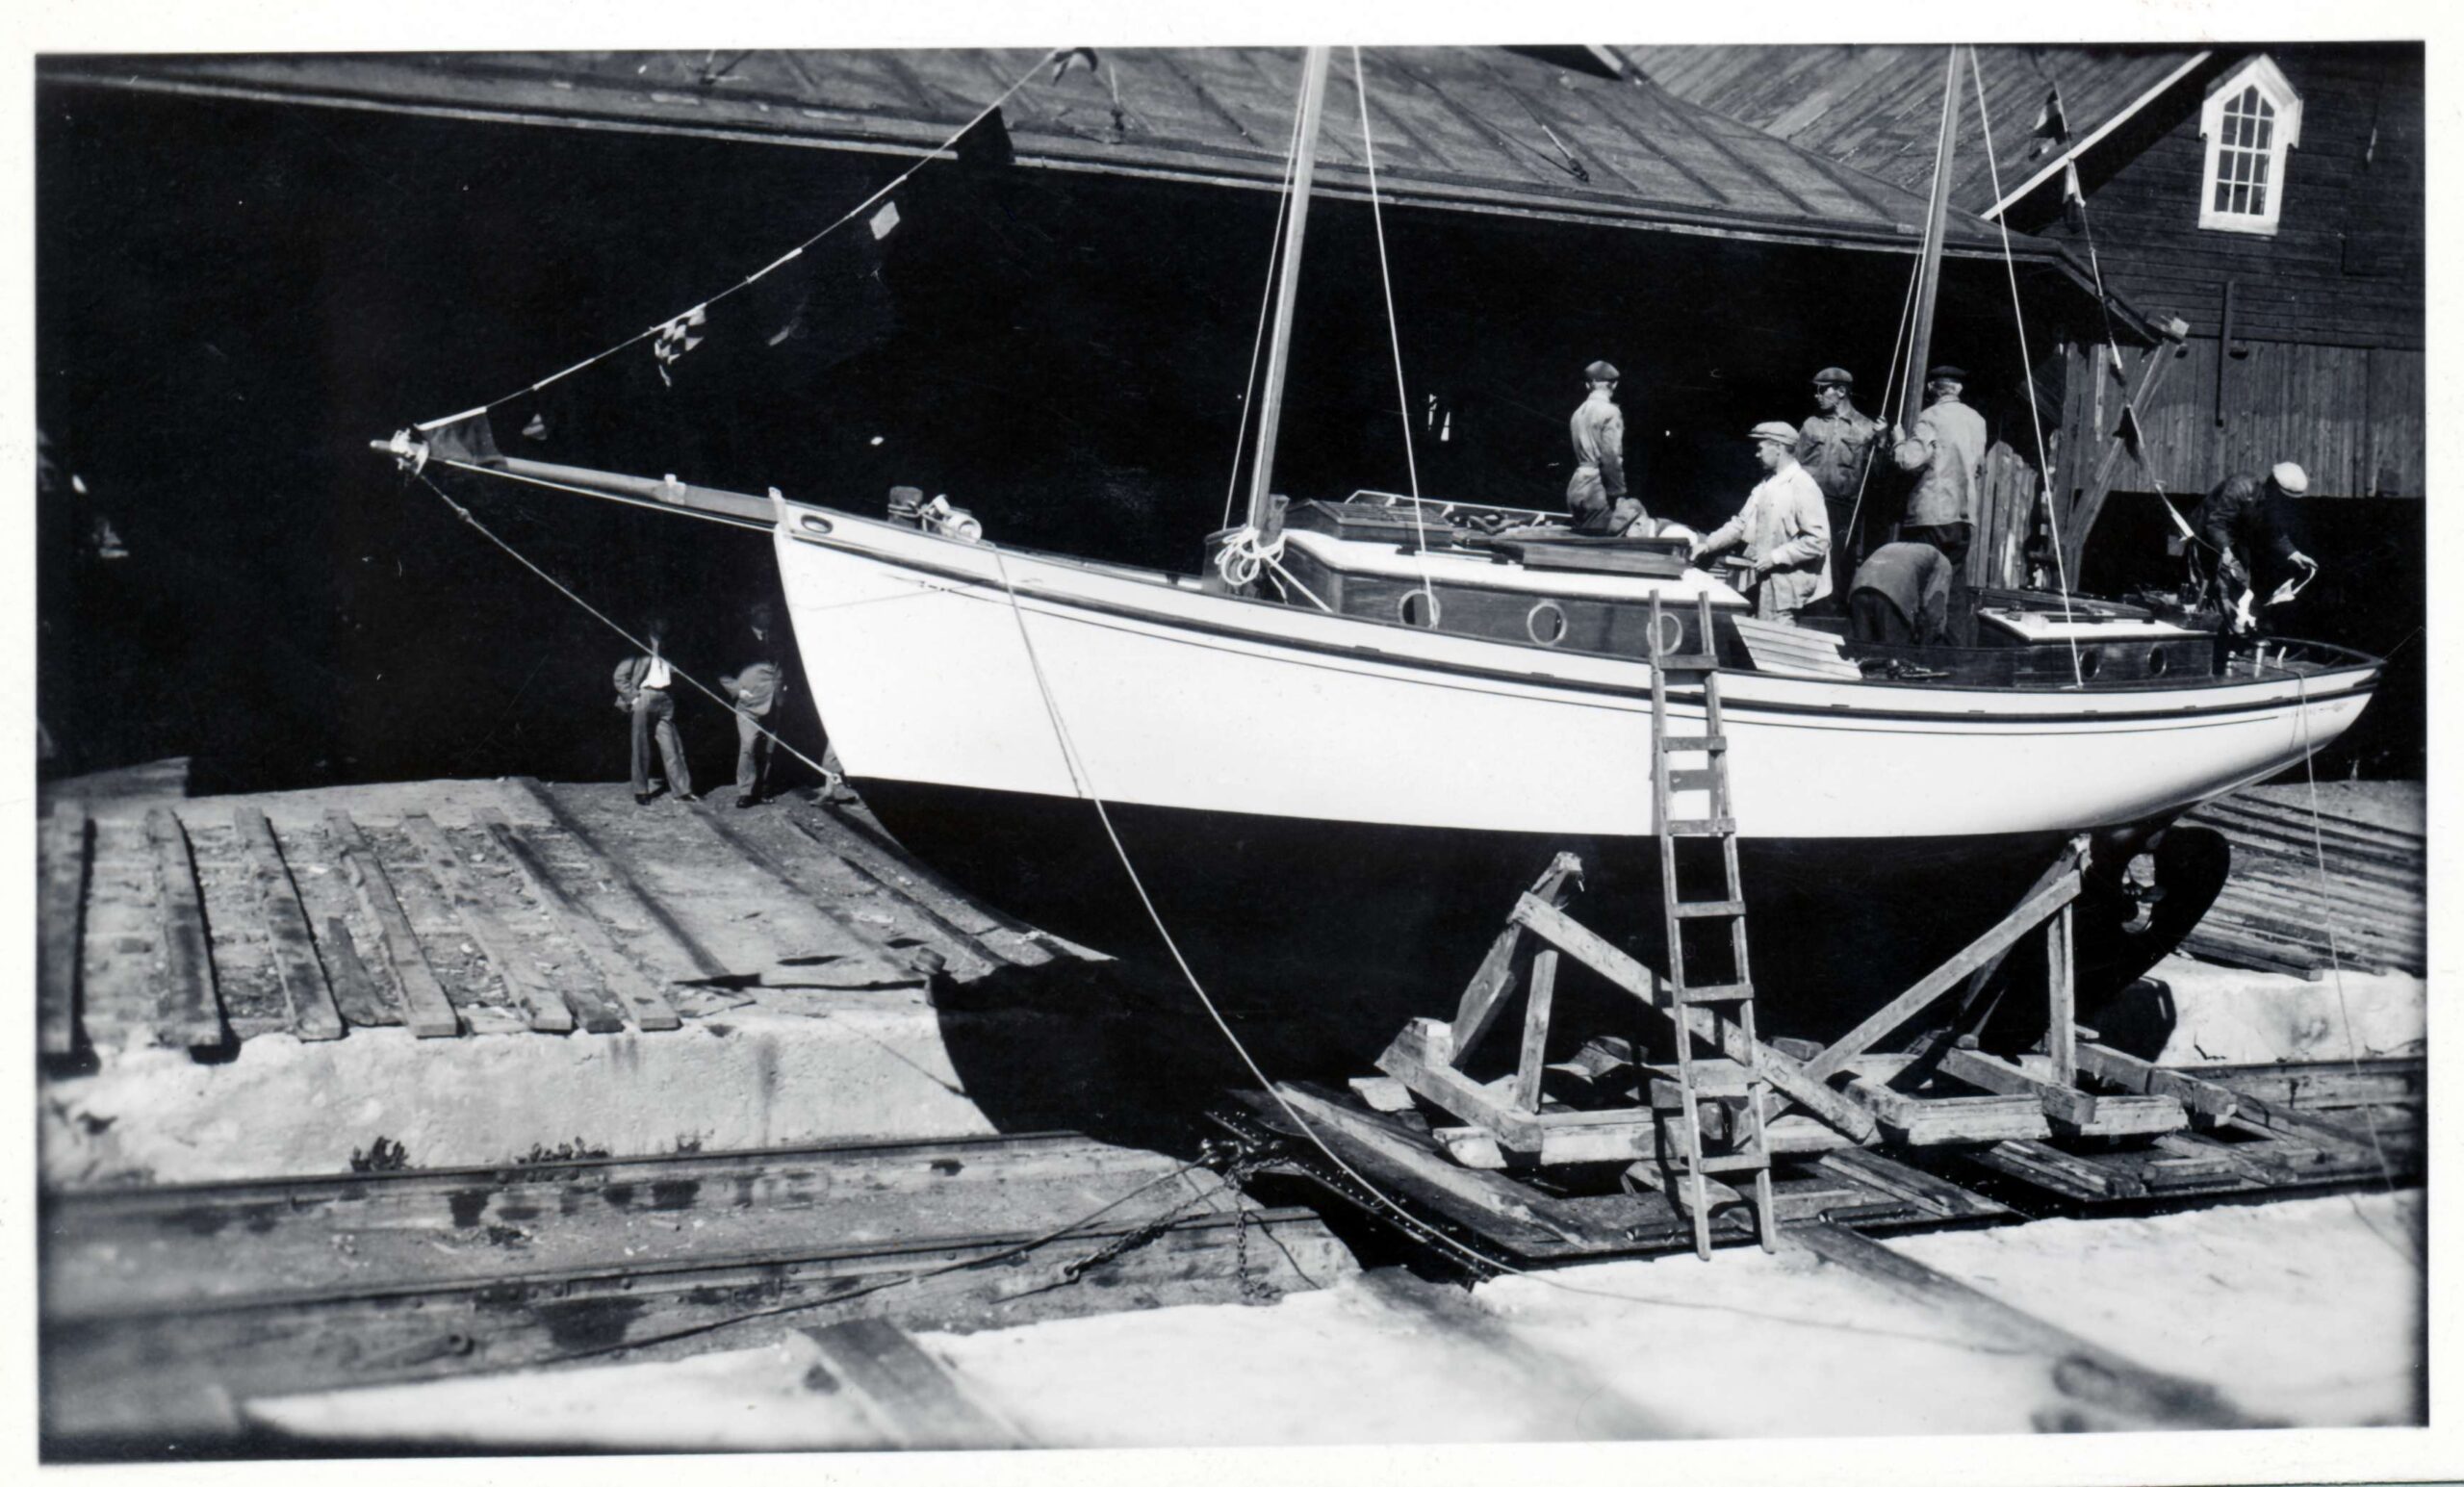 Göran Schildts´ classic boat Daphne designed by Jarl Lindblom just prior to its maiden launch in 1935 at Åbo båtvarv. Photo ©Tom Bäckströms collection